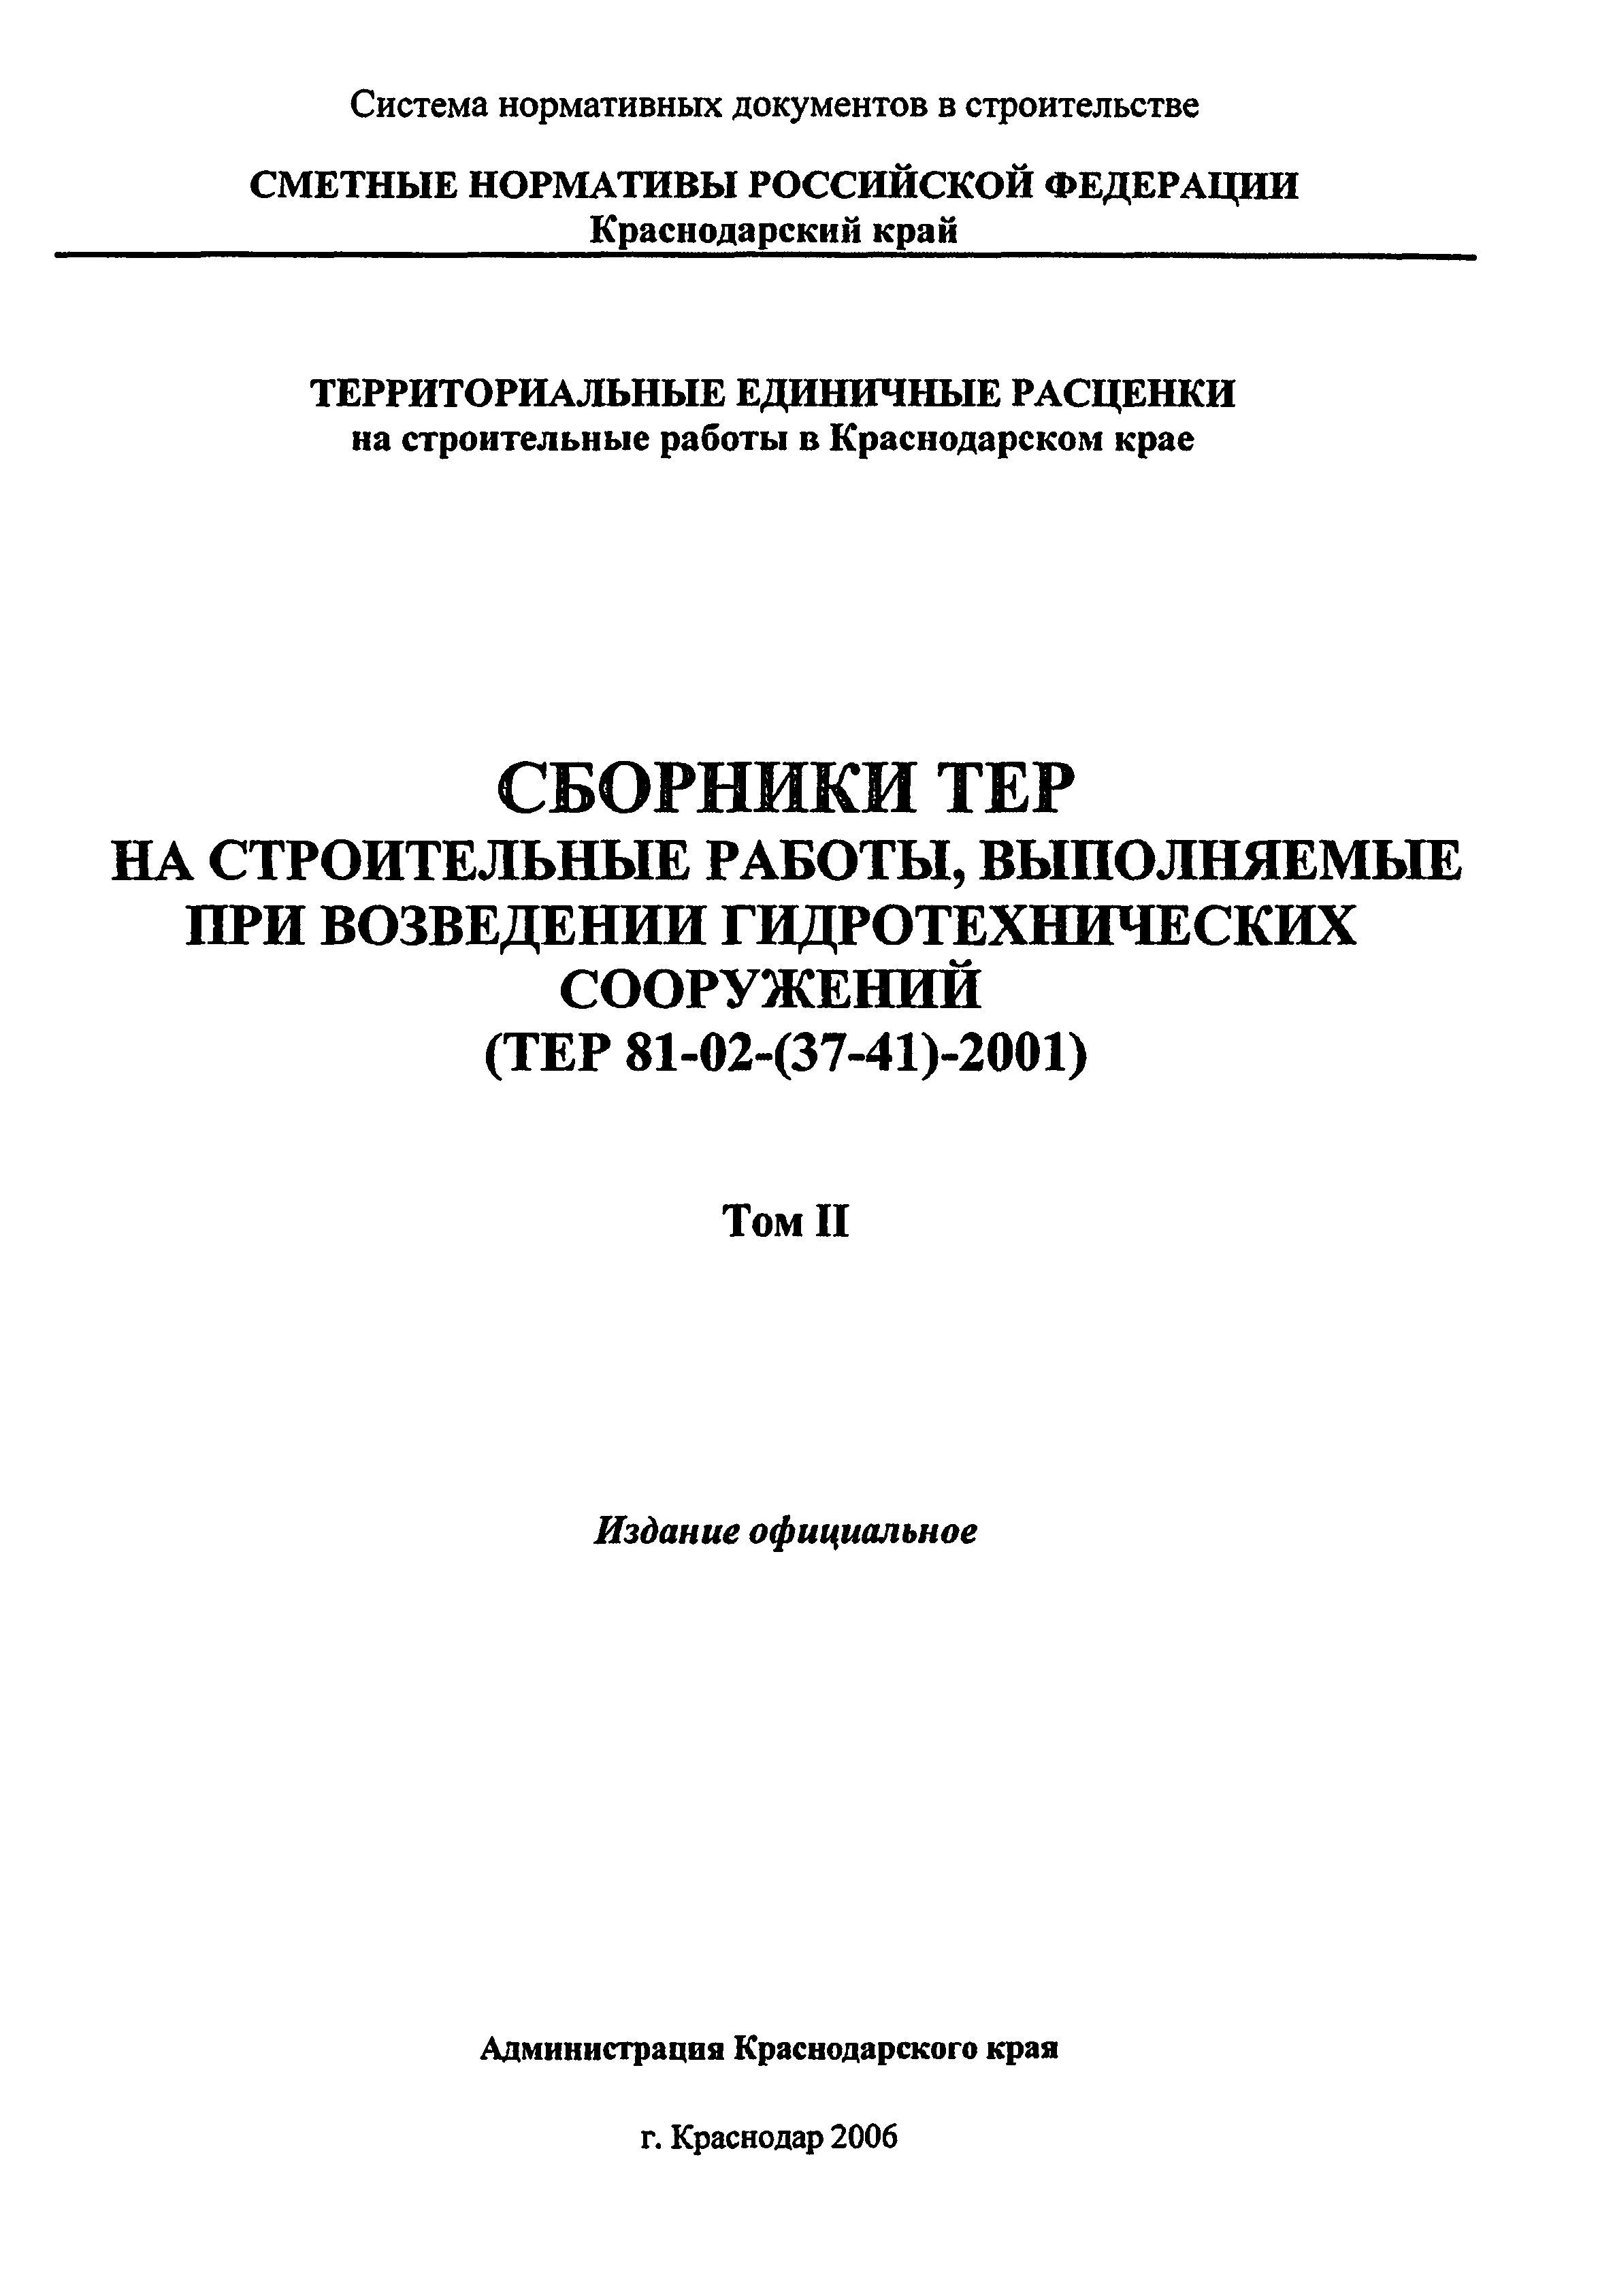 ТЕР Краснодарского края 2001-39